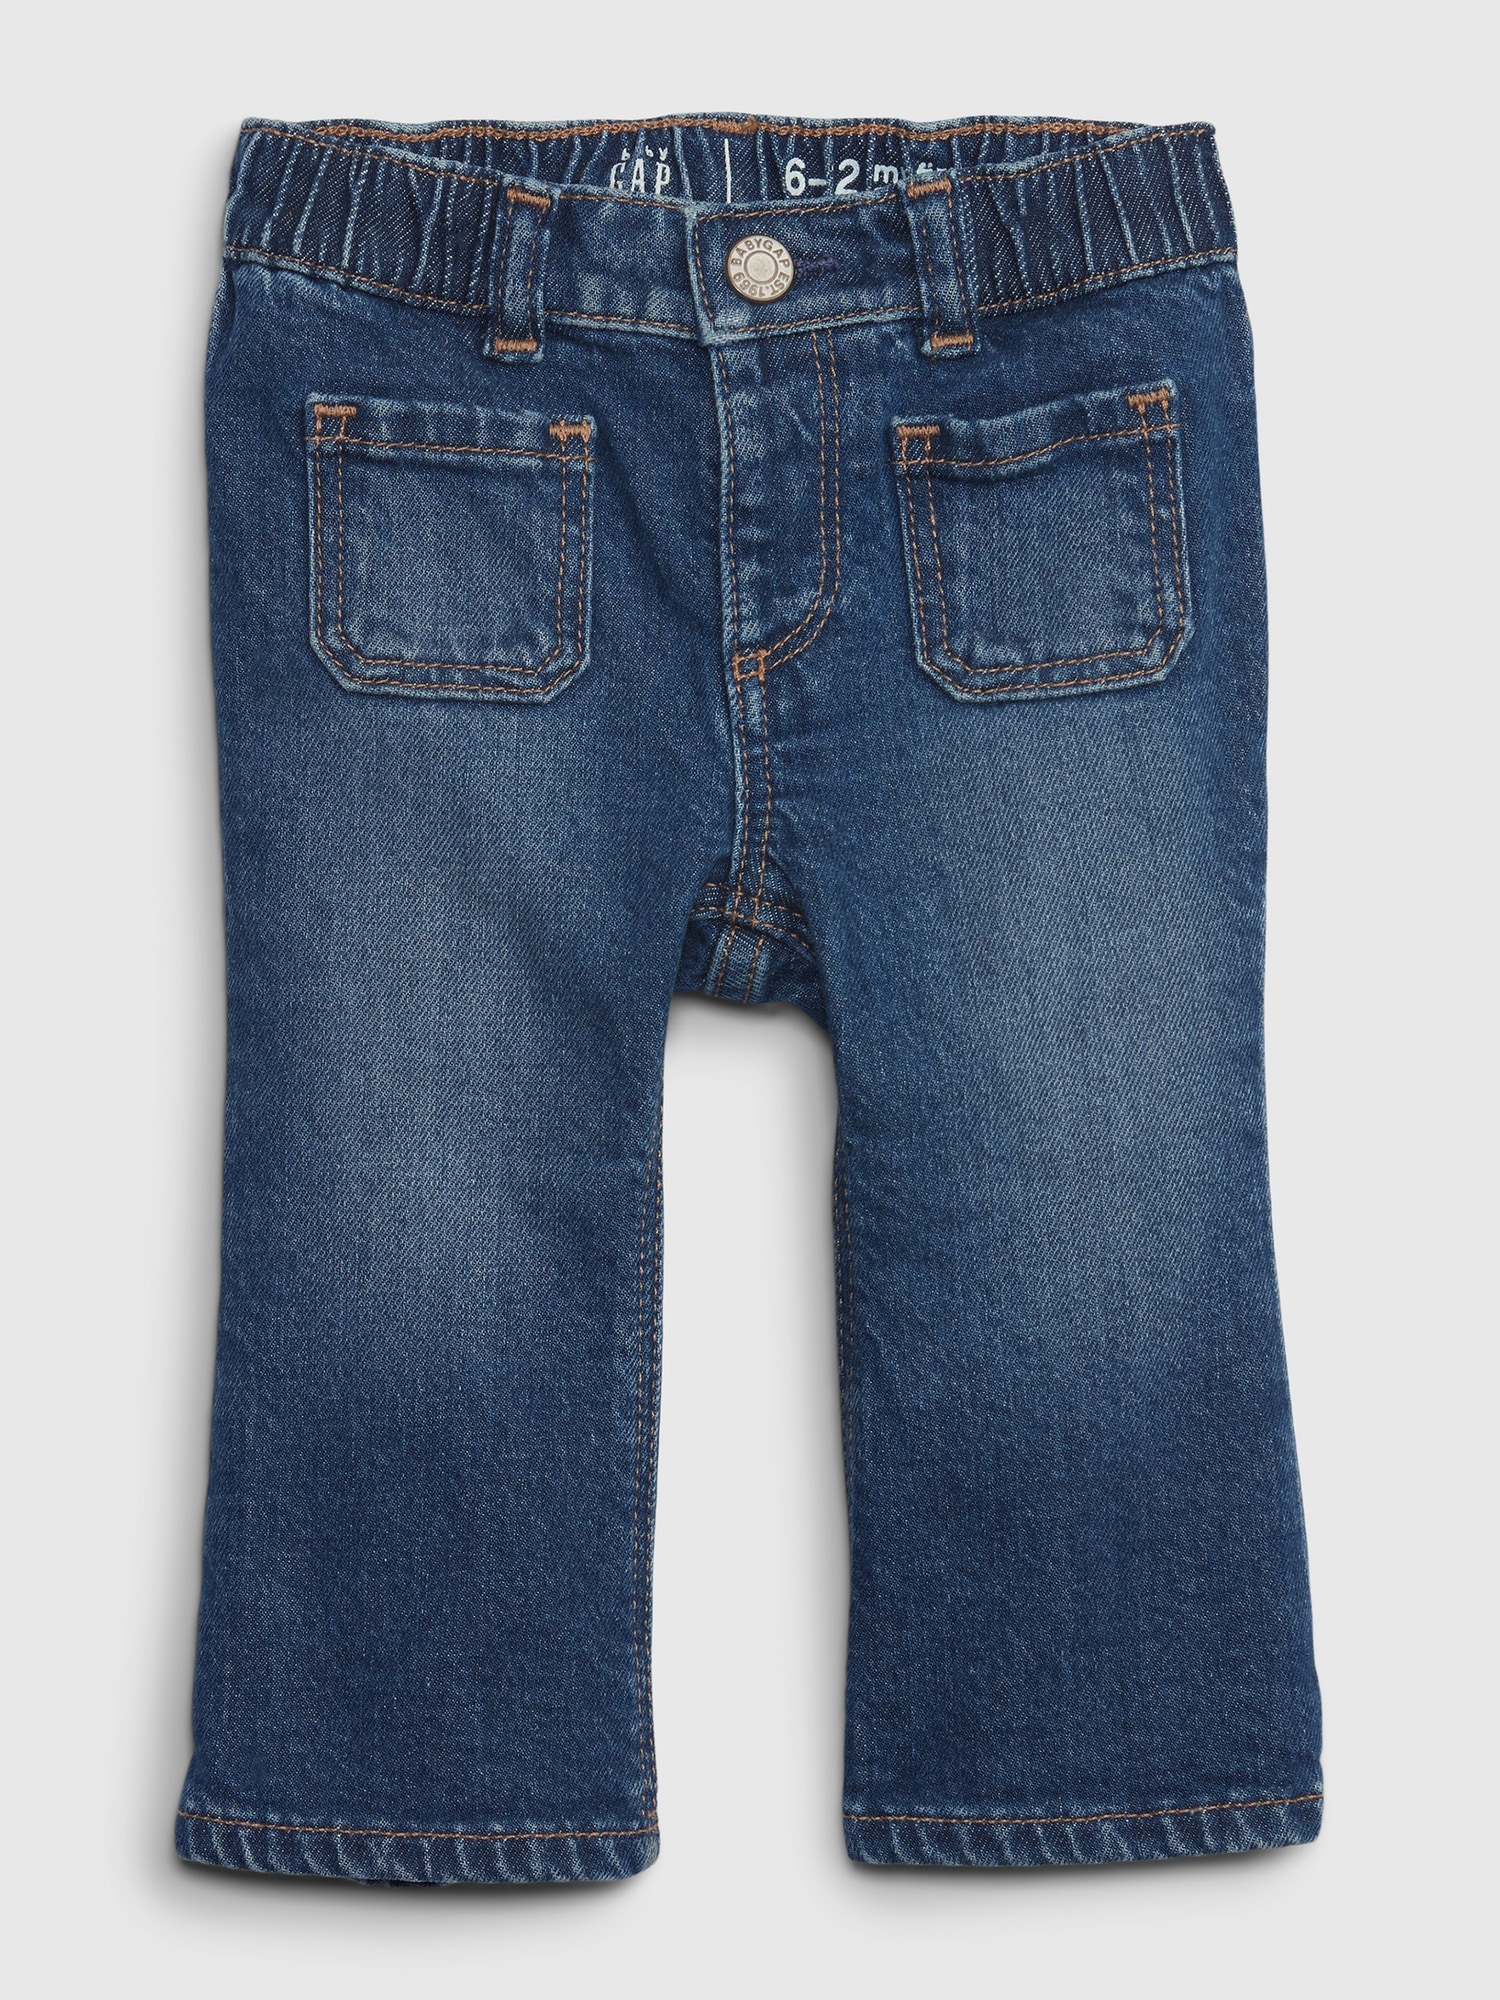 Denim Jeans Trousers Clothes  Bell Bottom Pants Children